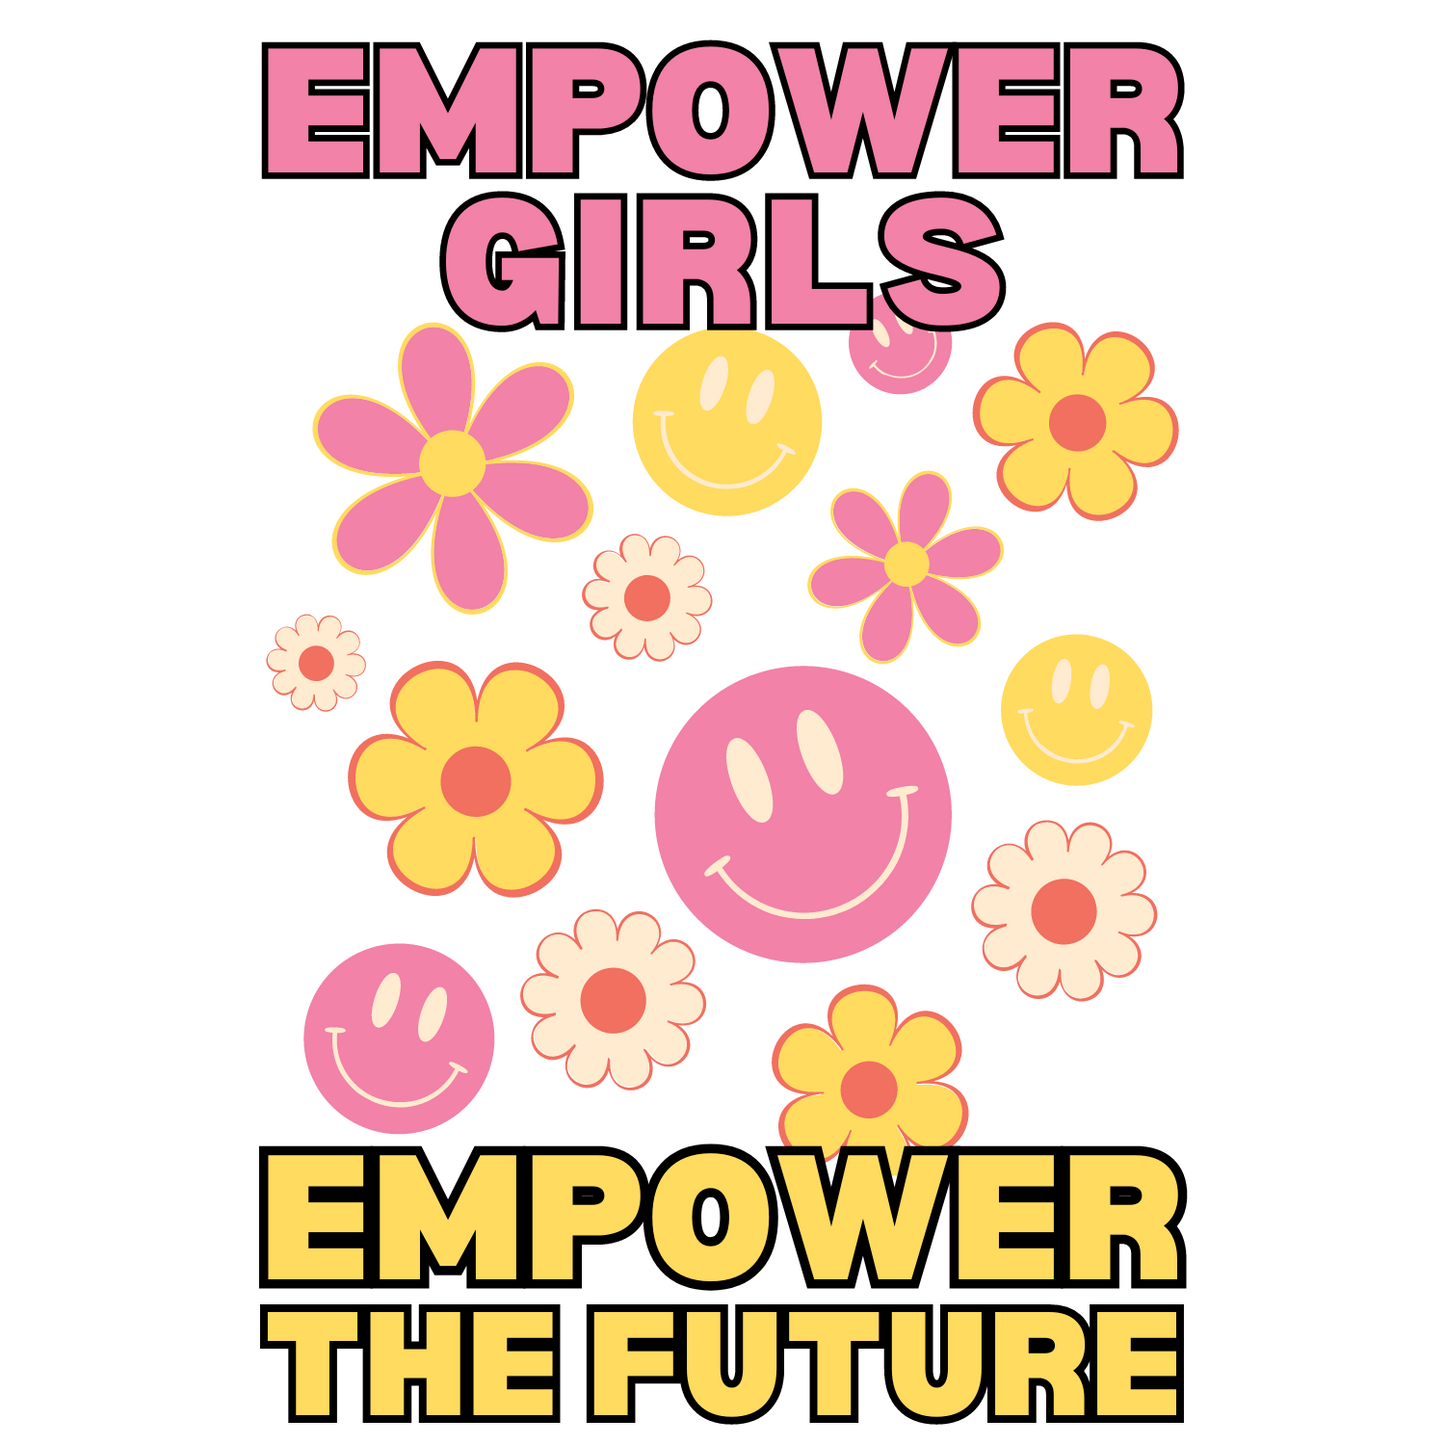 Empower Girls Empower The Future Youth Bella Canvas 3001Y Tee